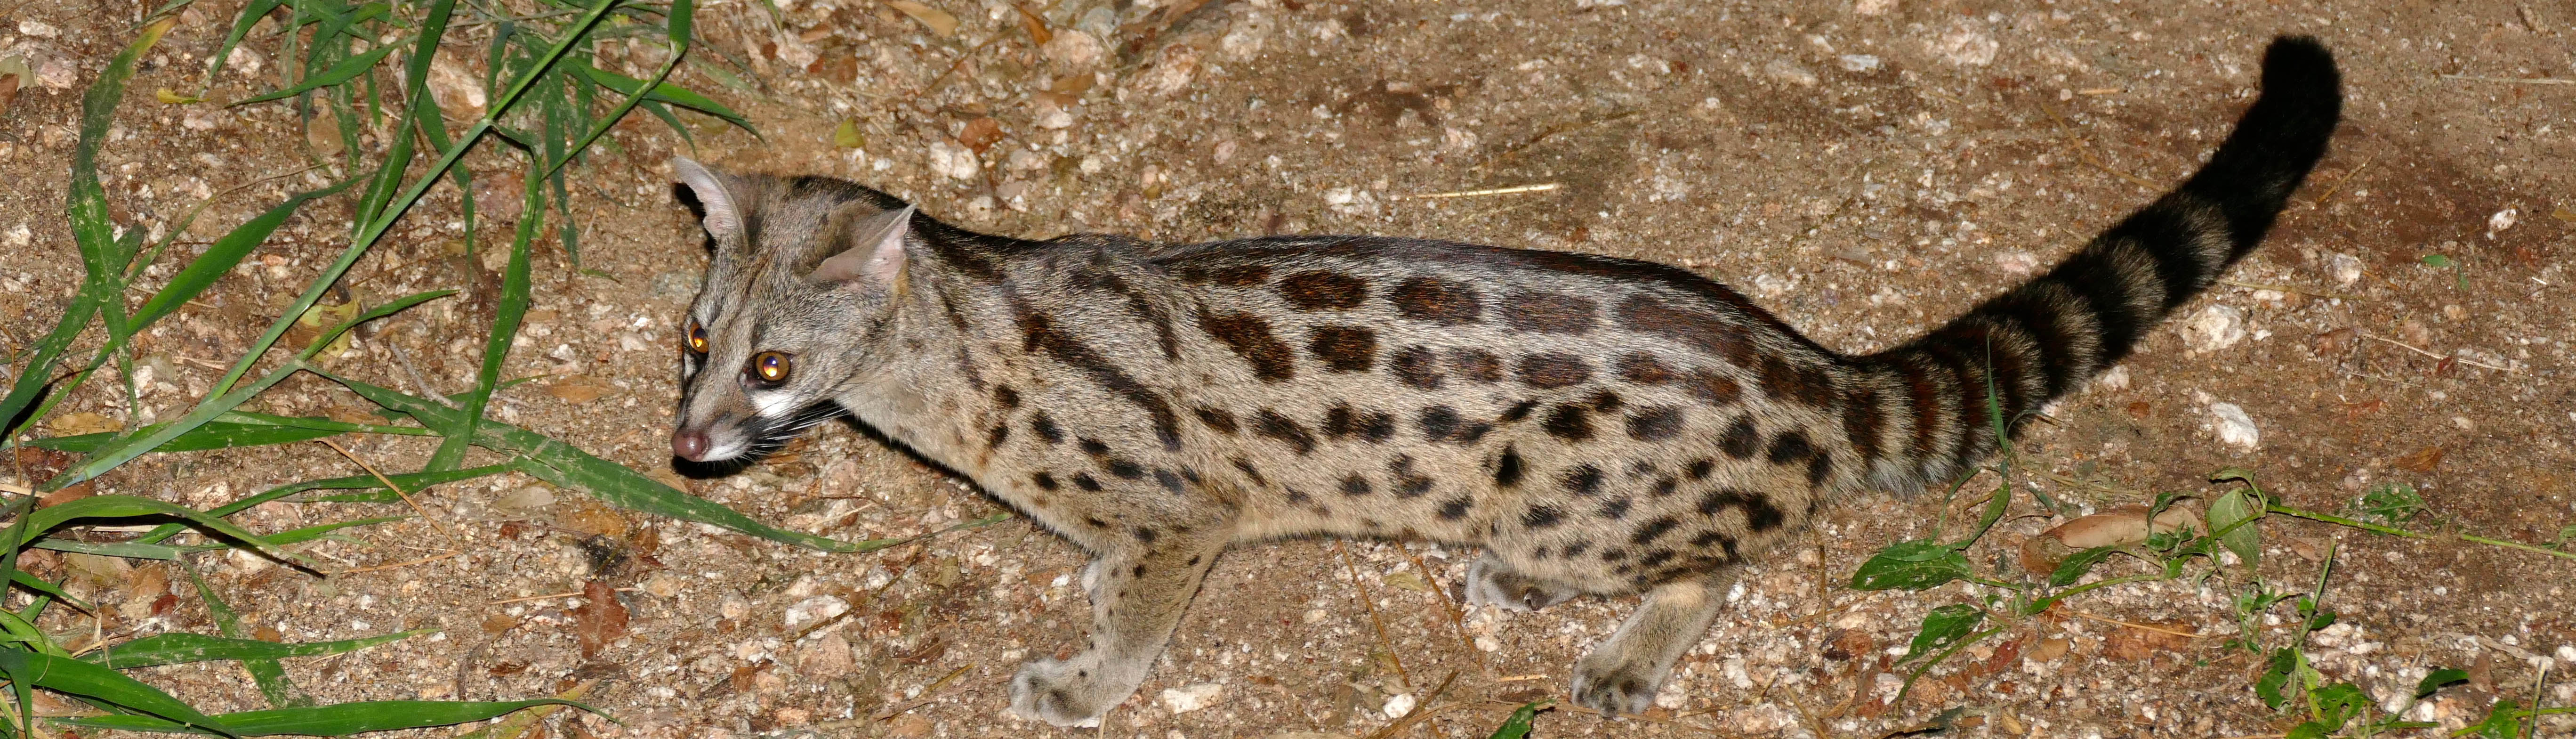 Large spotted Genet | Wikimedia